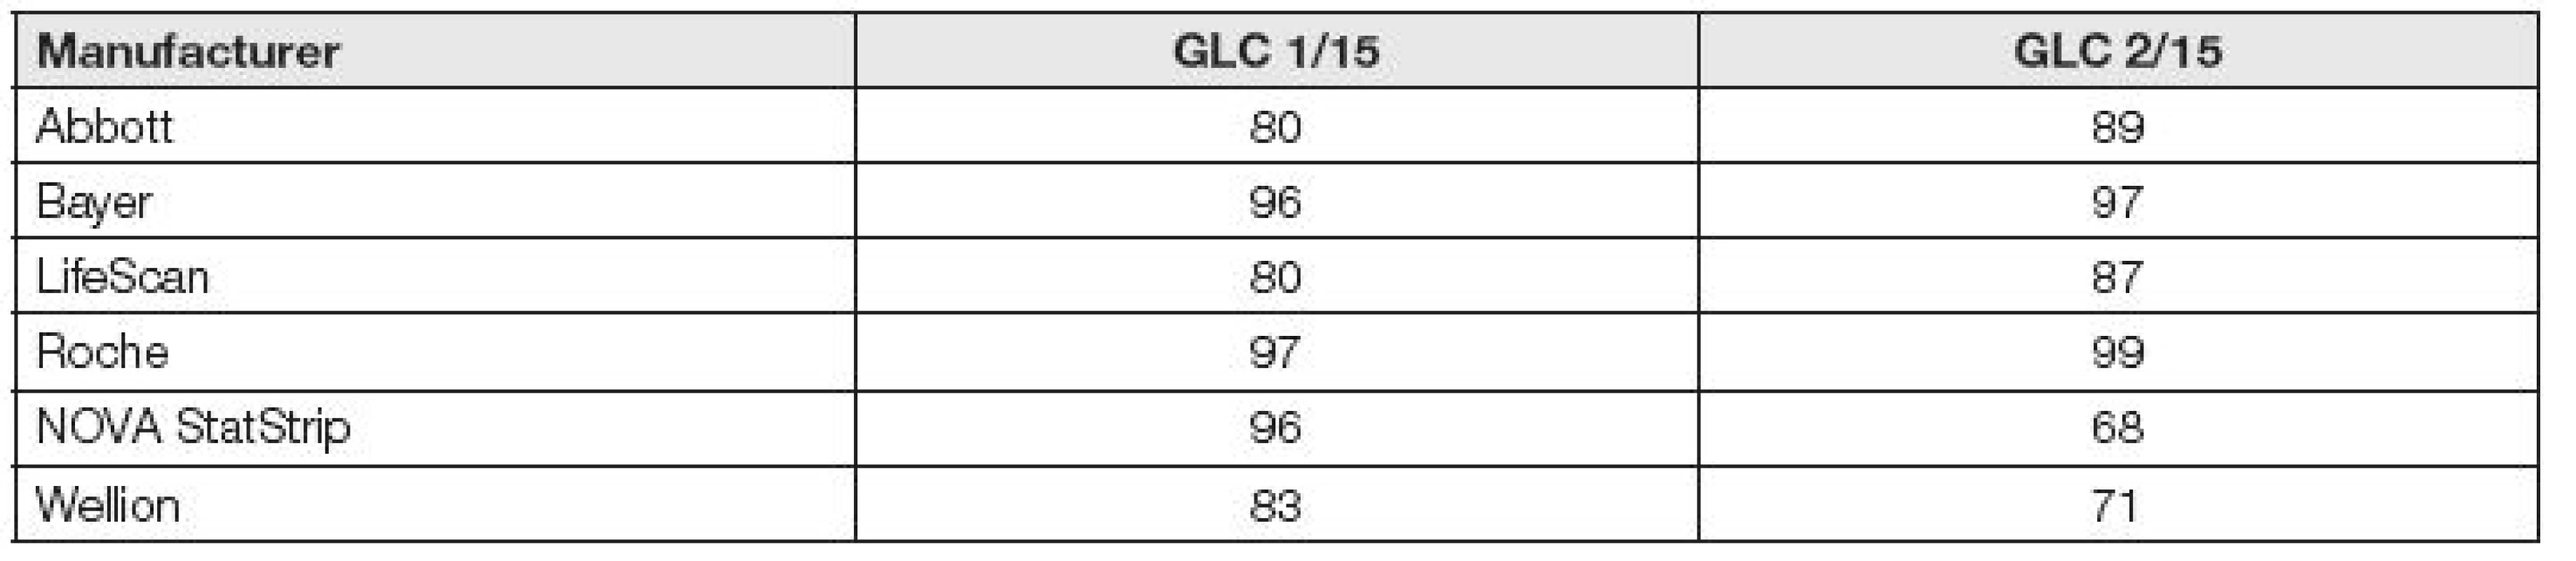 Successfullness (%) for glucometers of some manufacturers in SEKK program 2015 (D&lt;sub&gt;max &lt;/sub&gt;= 10 %)